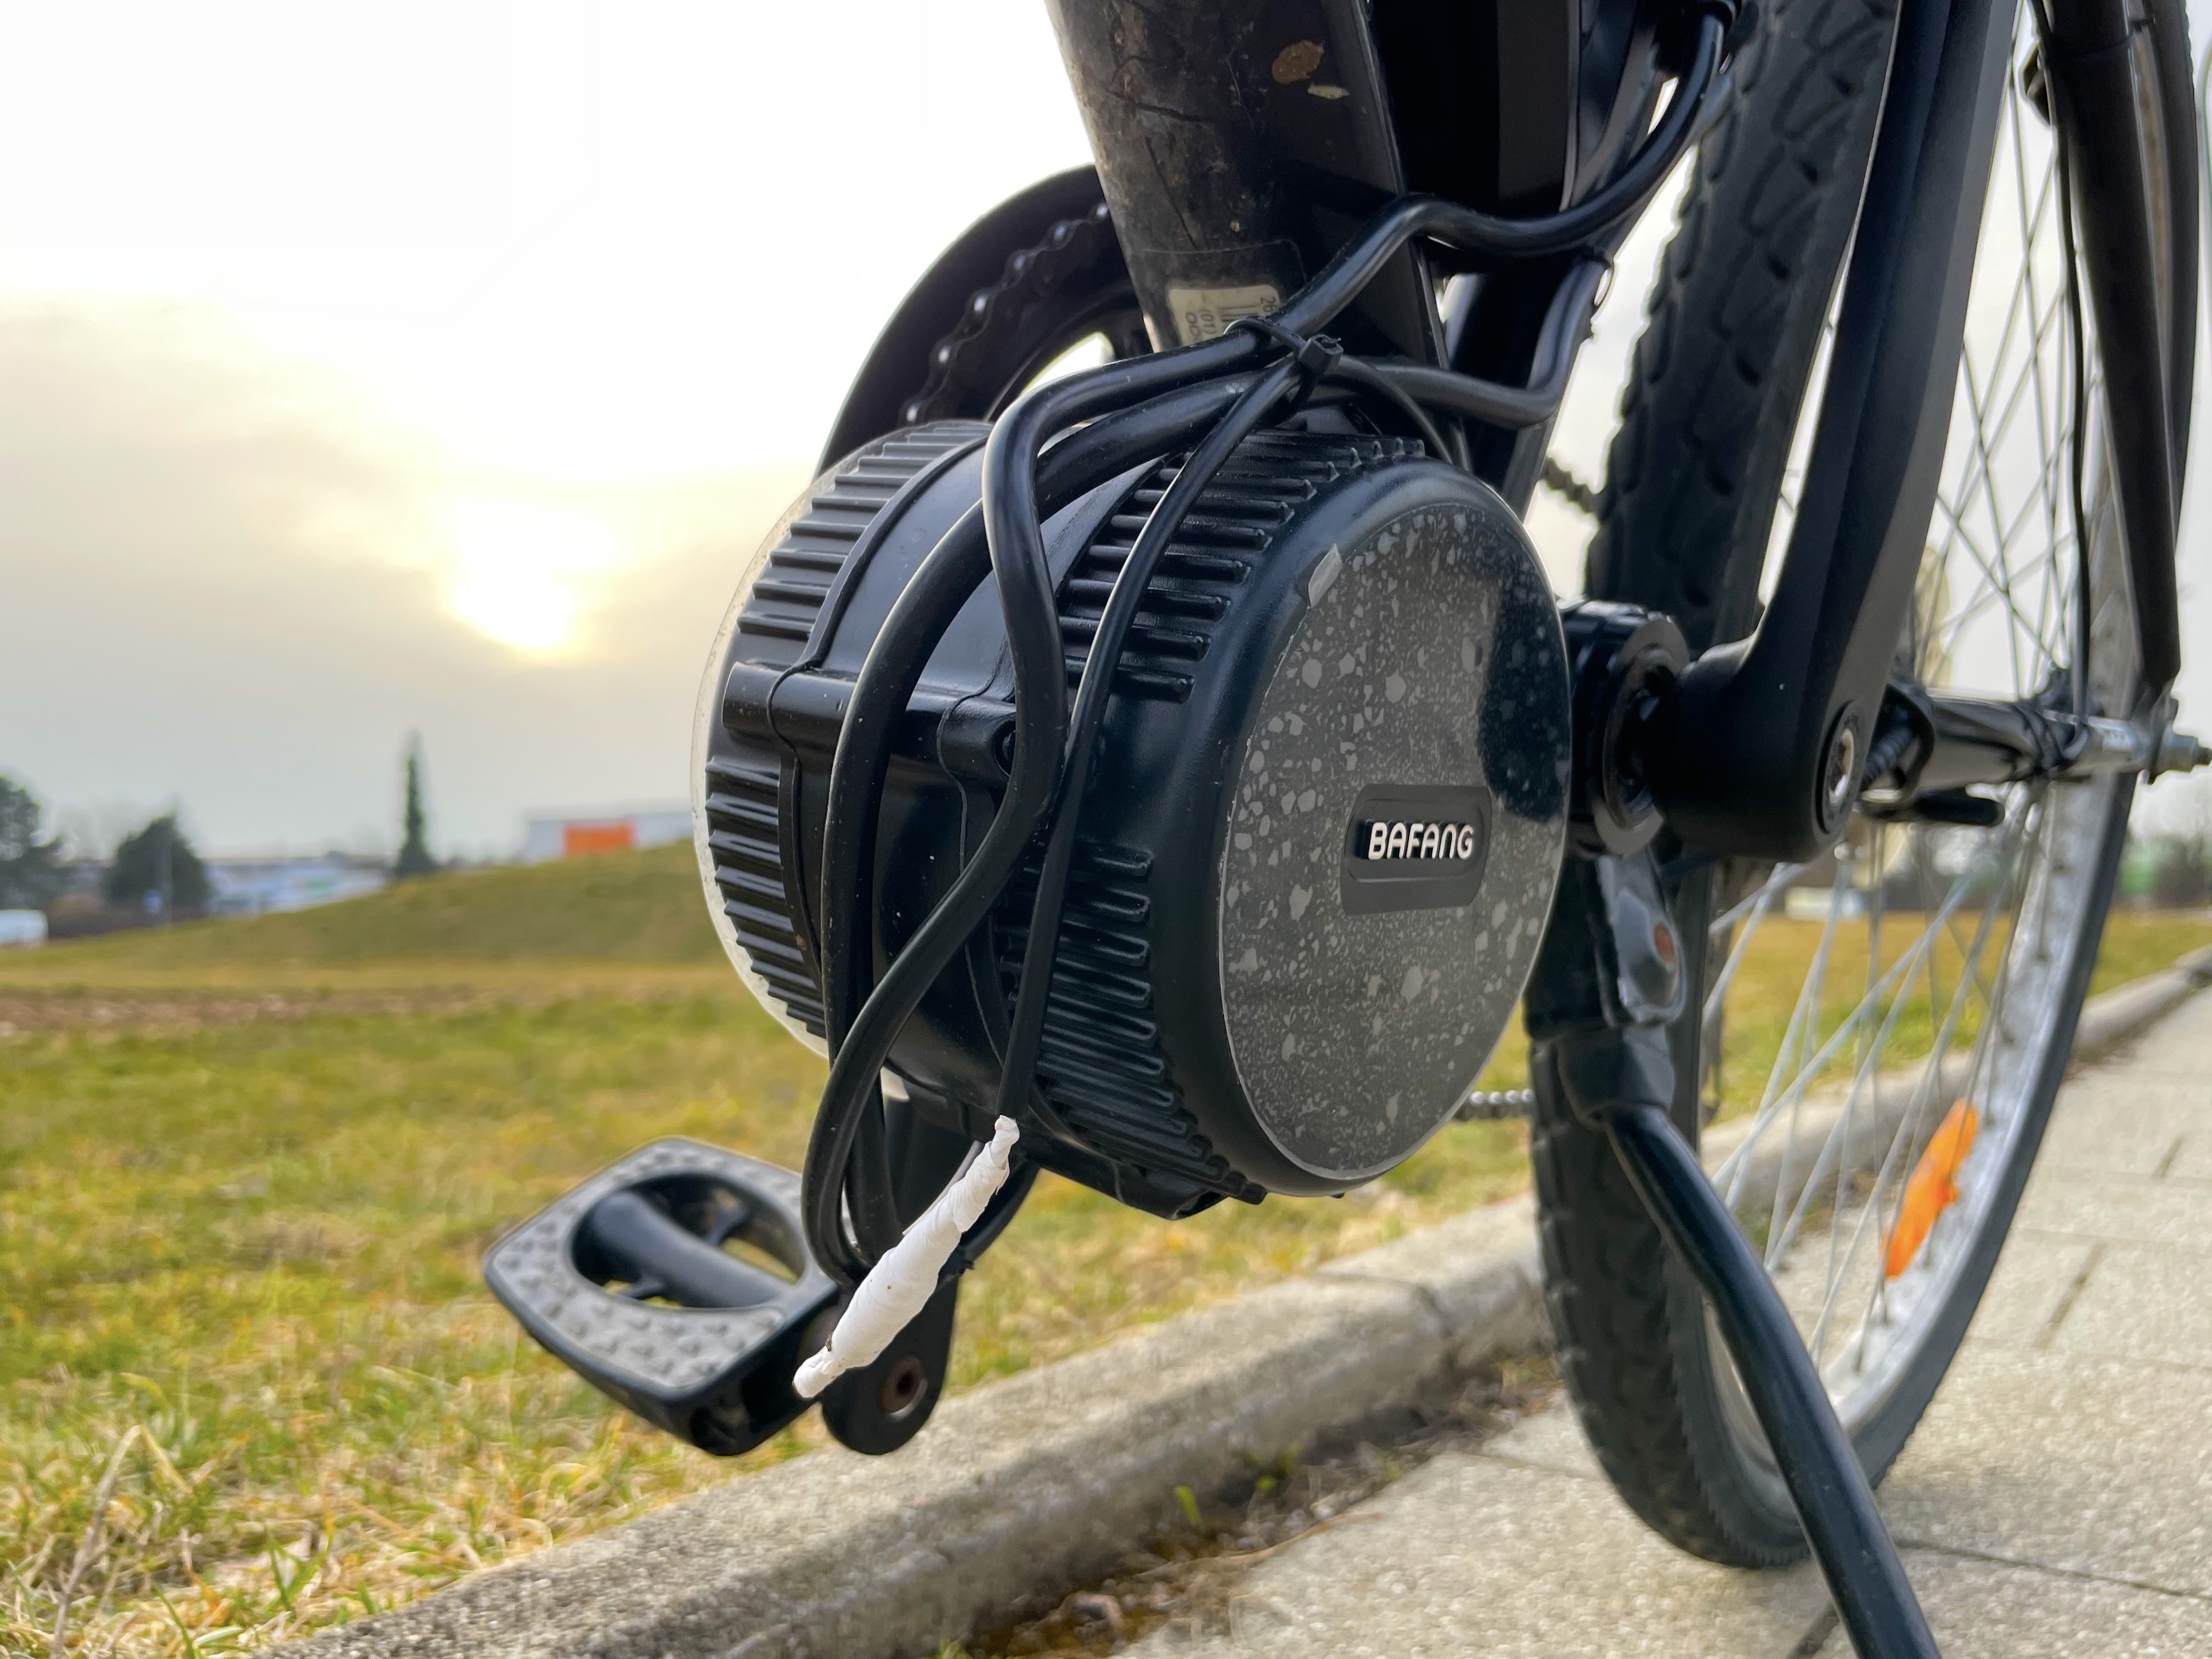 Fahrrad legal zum E-Bike umbauen: Nachrüstsatz mit Motor & Akku ab 300 Euro